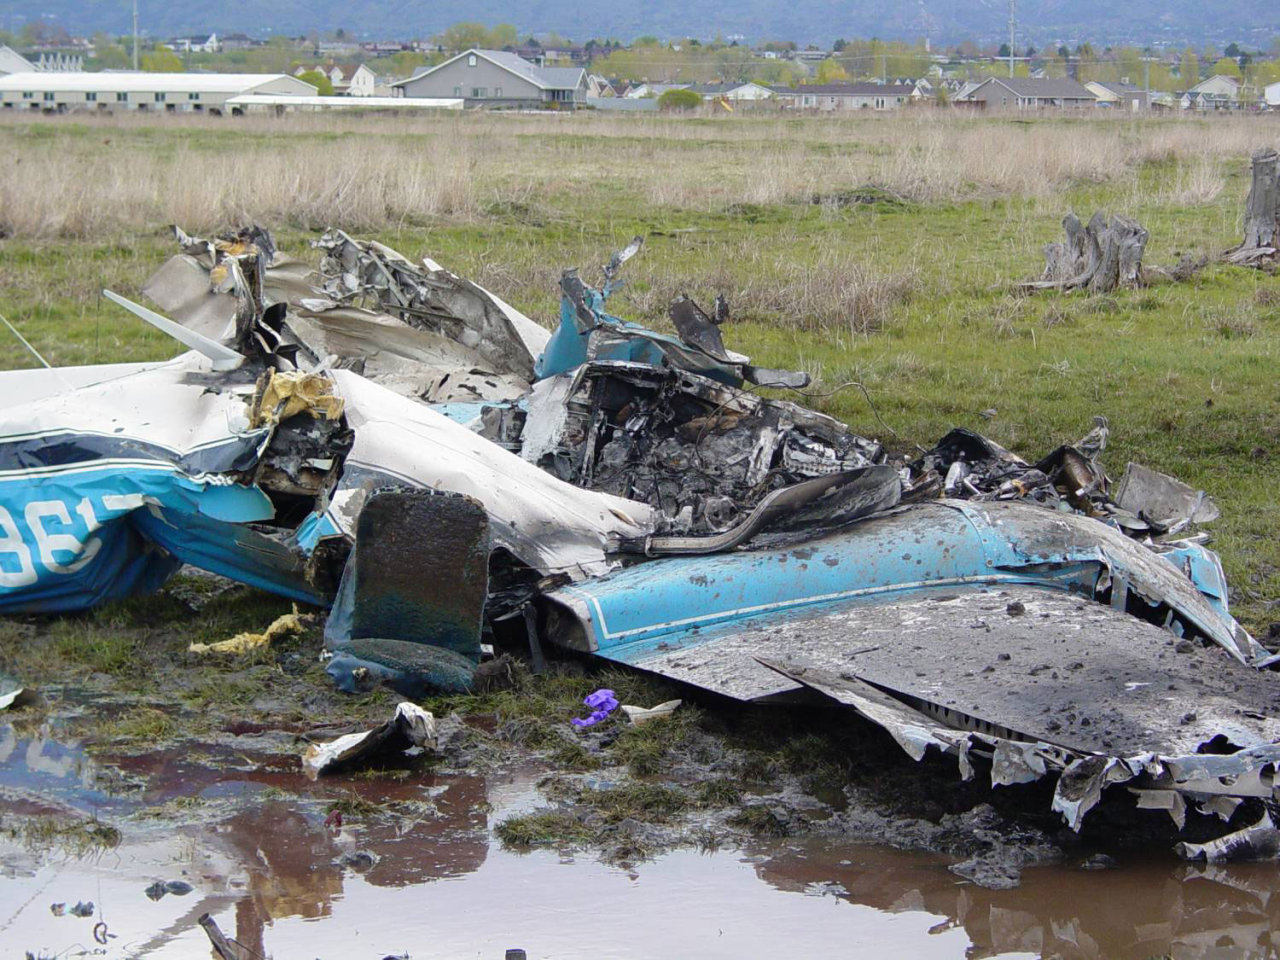 10 die in plane crash in far eastern Russia